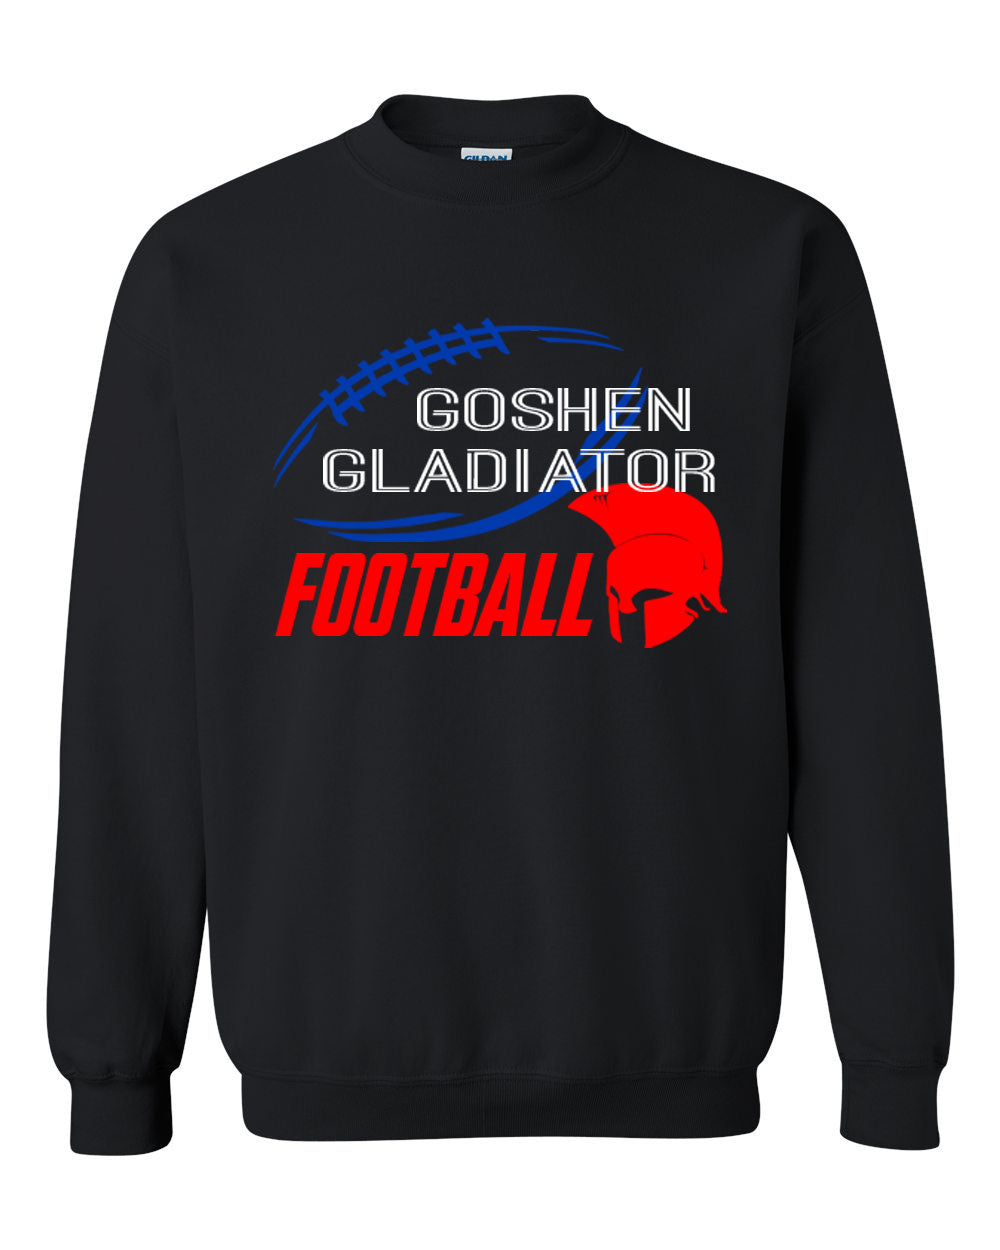 Goshen Football design 6 non hooded sweatshirt